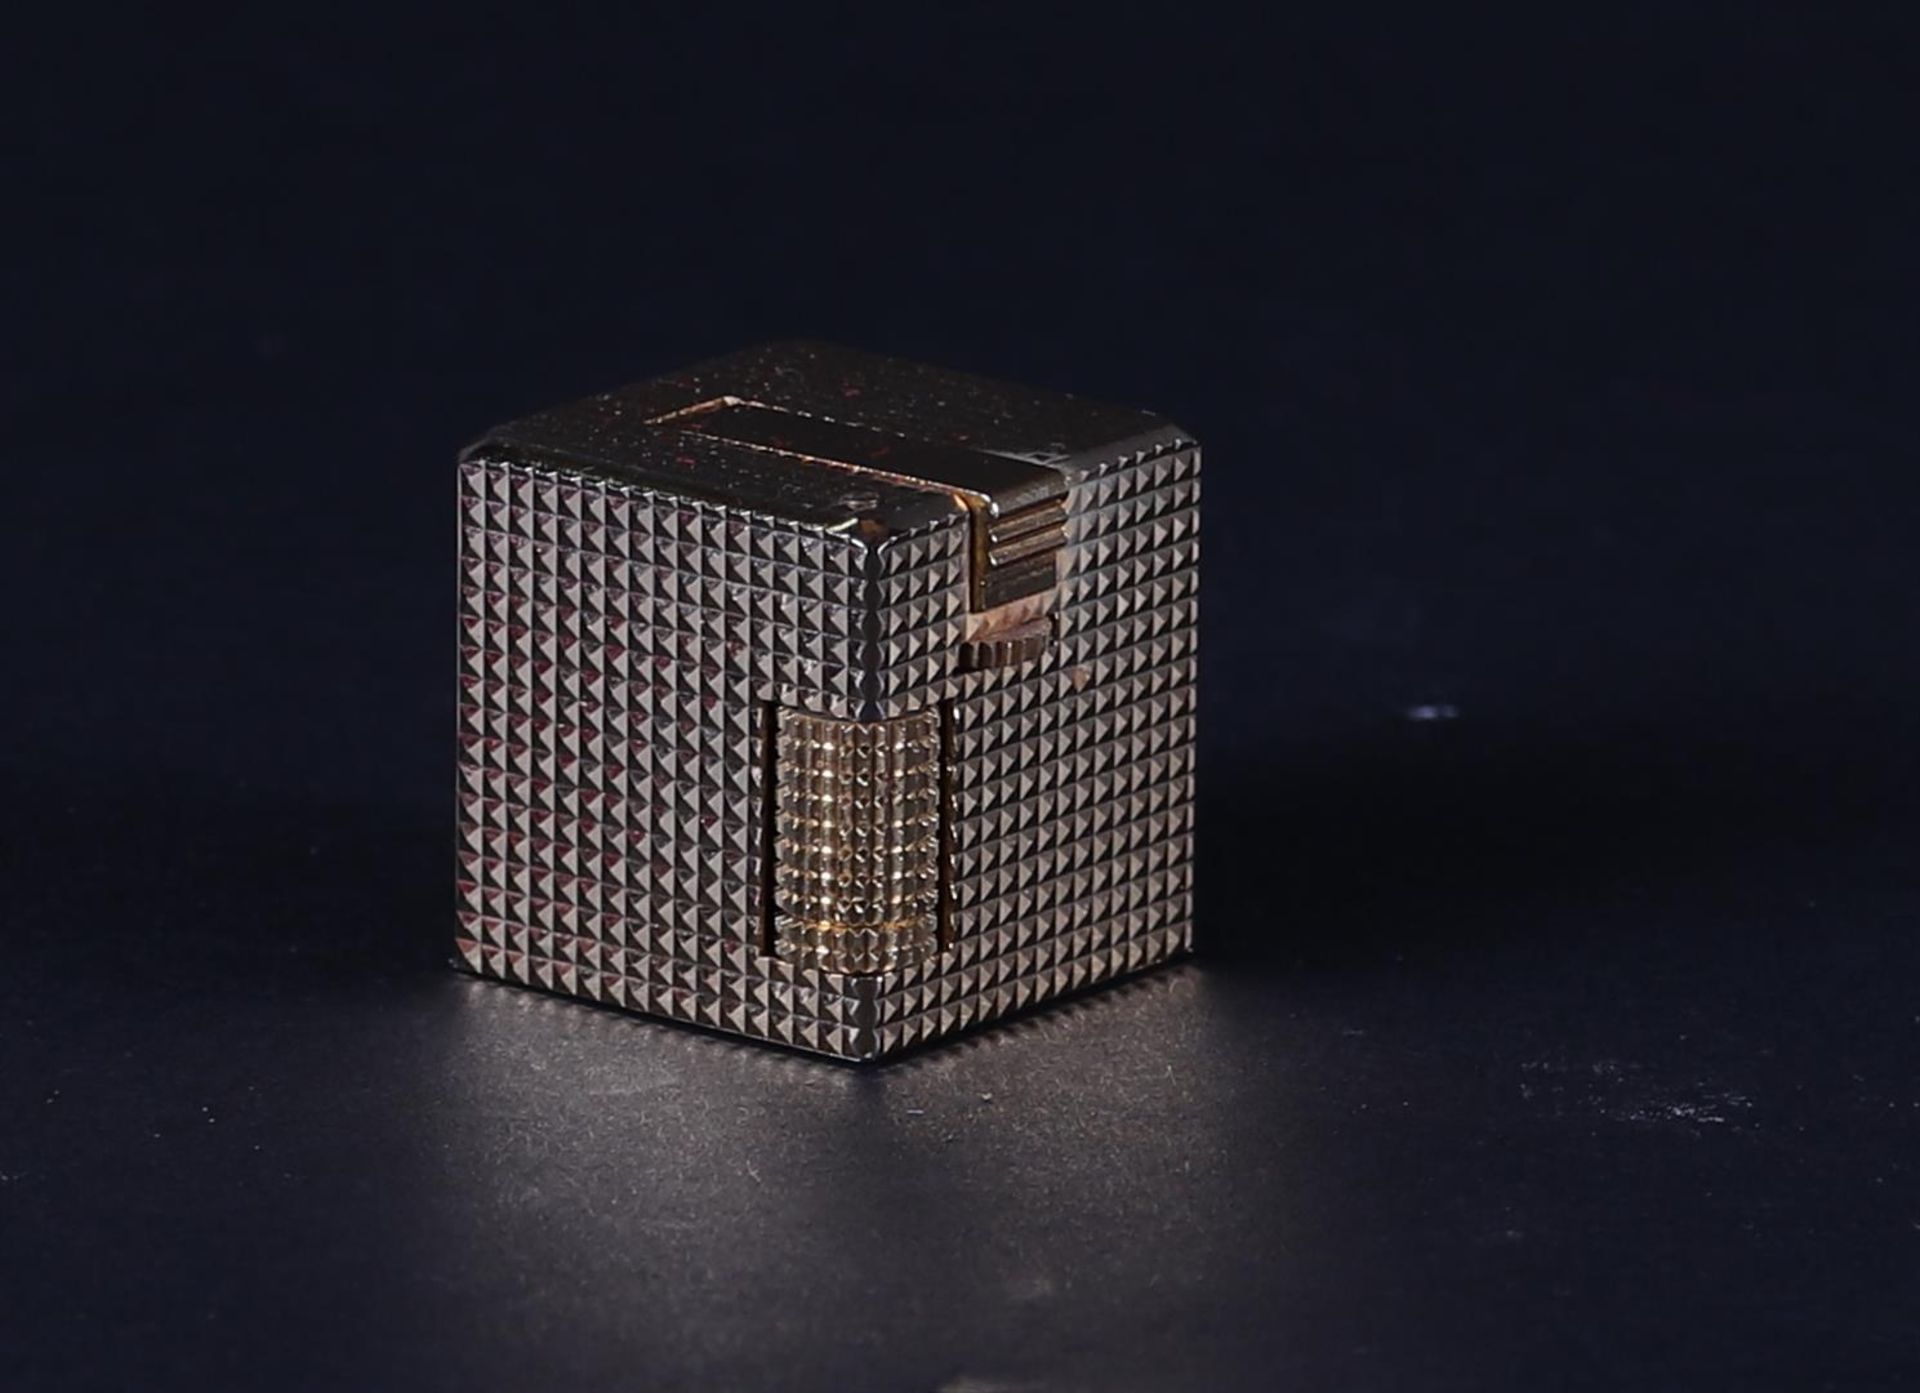 A Bucherer Ippag Dice lighter, ca. 1970. Lighter in original white case (ipag dice). - Image 2 of 4